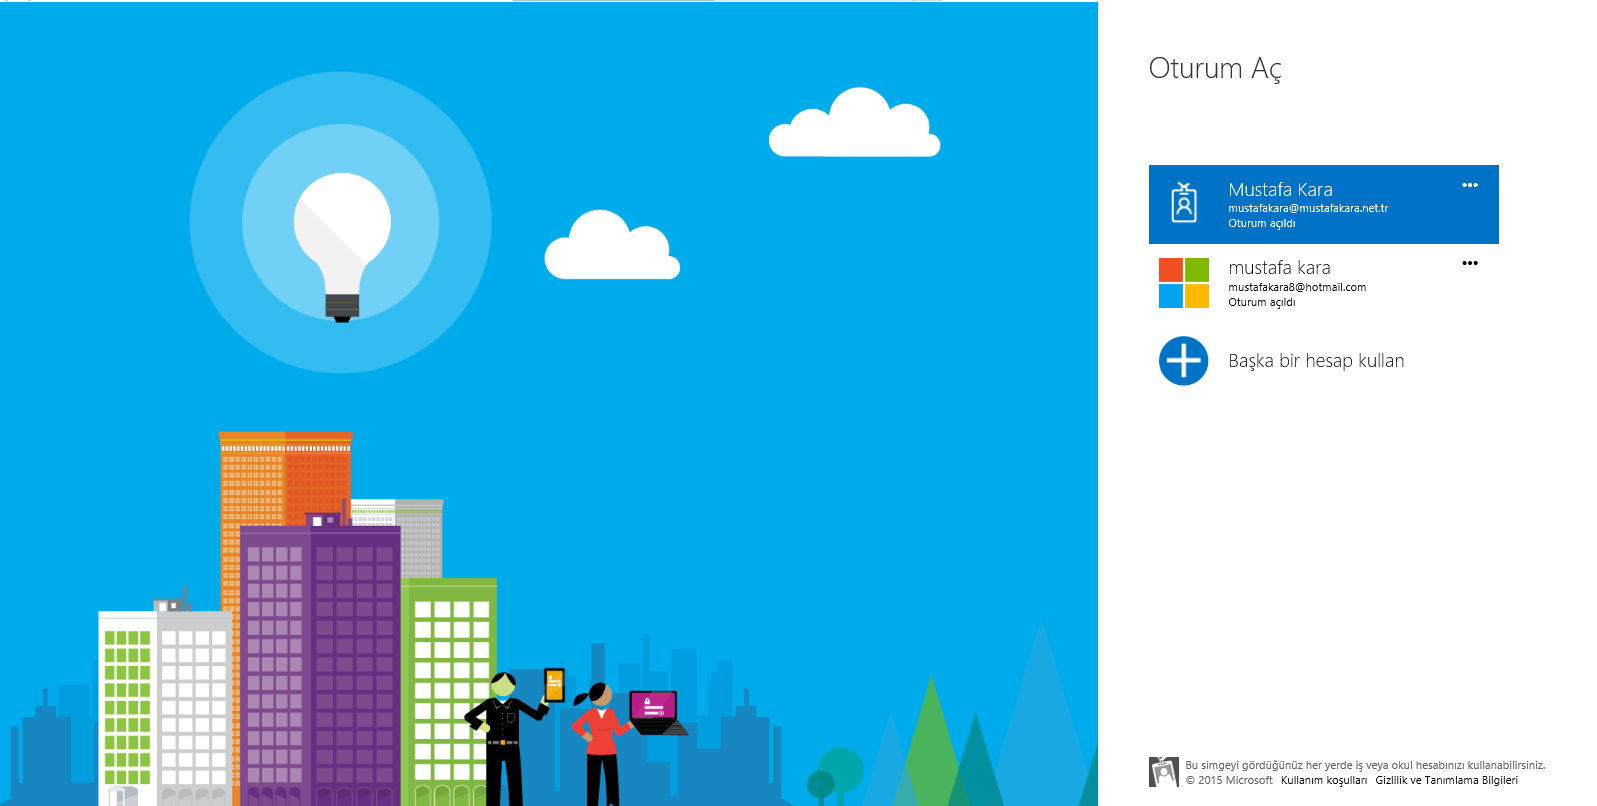 MS Logon. Azure ad Windows 10 логин. Windows hello for Business login Screen.